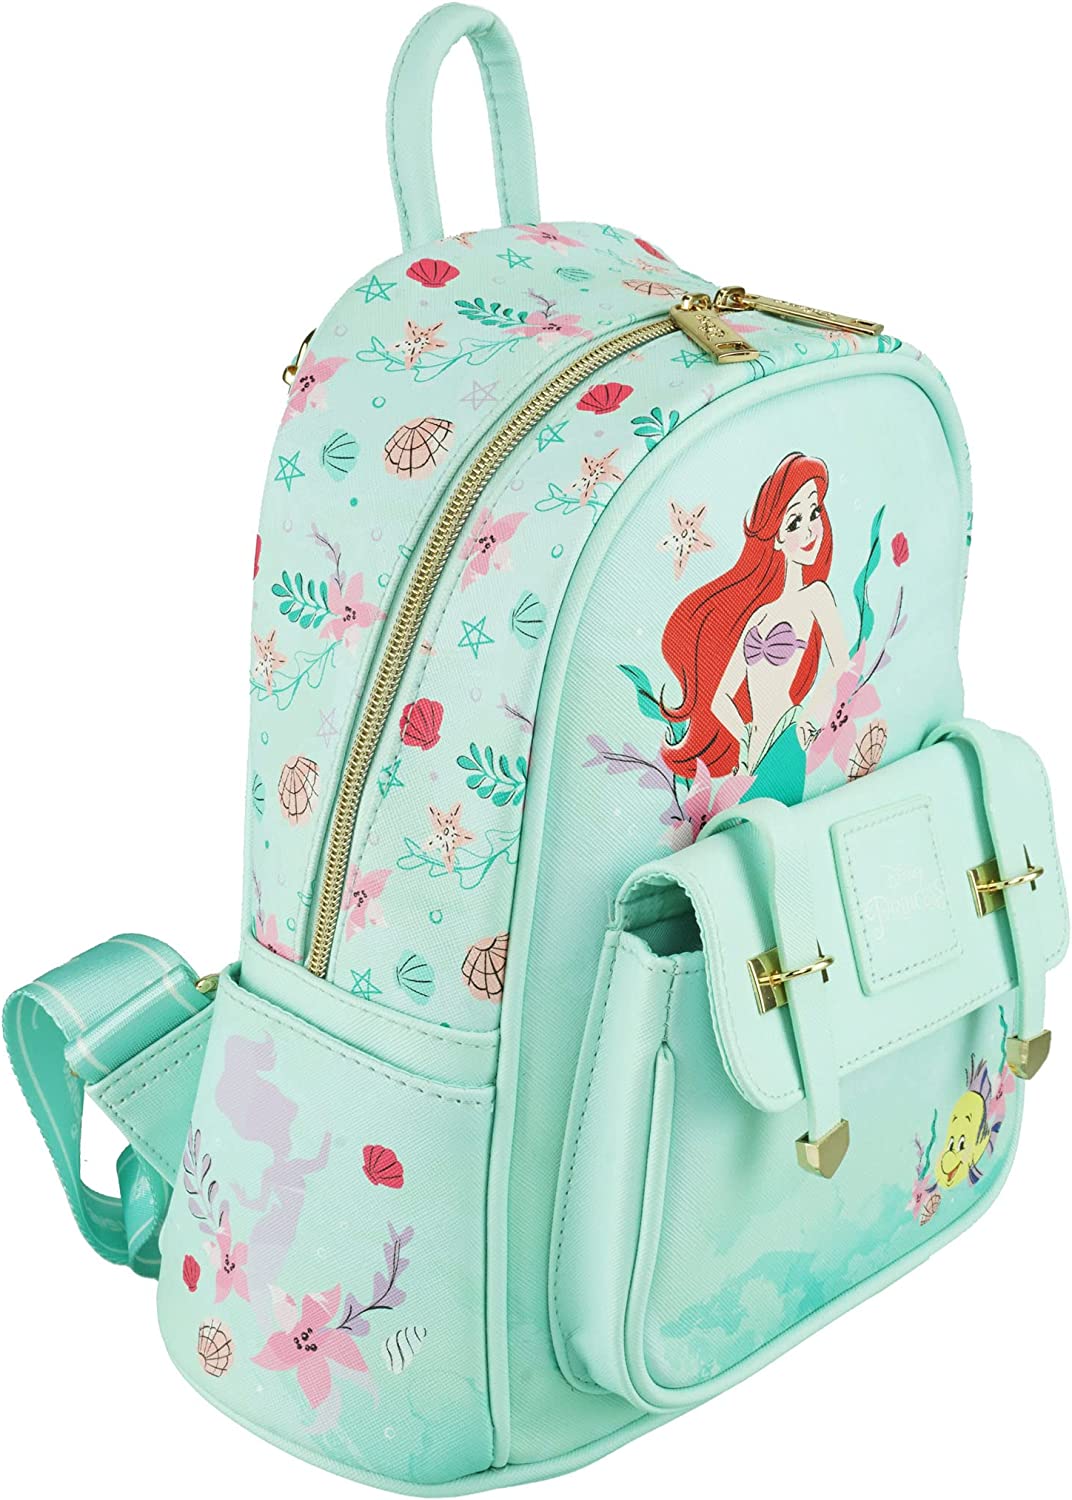 The Little Mermaid - Wondapop 11 Inch Vegan Leather Mini Backpack - A22502